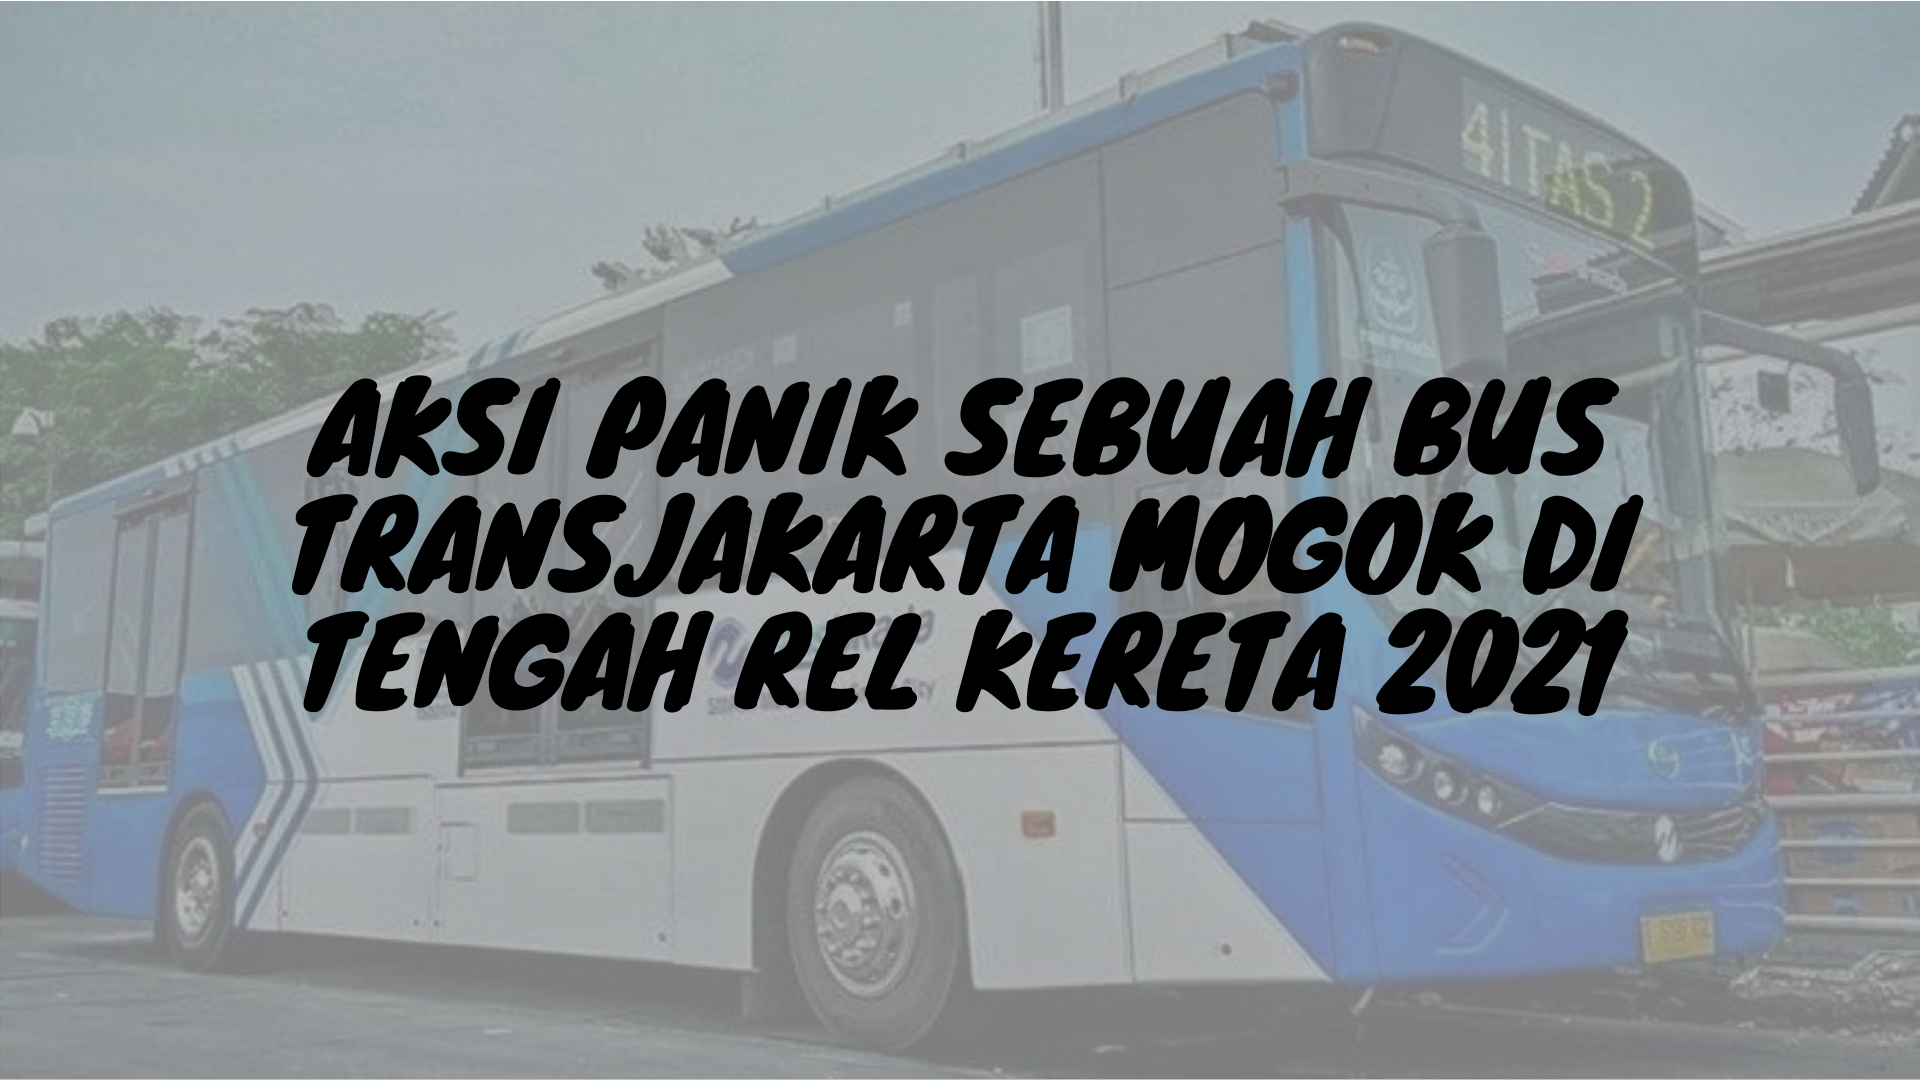 Bus Transjakarta mogok saat diepertengahan rel kereta